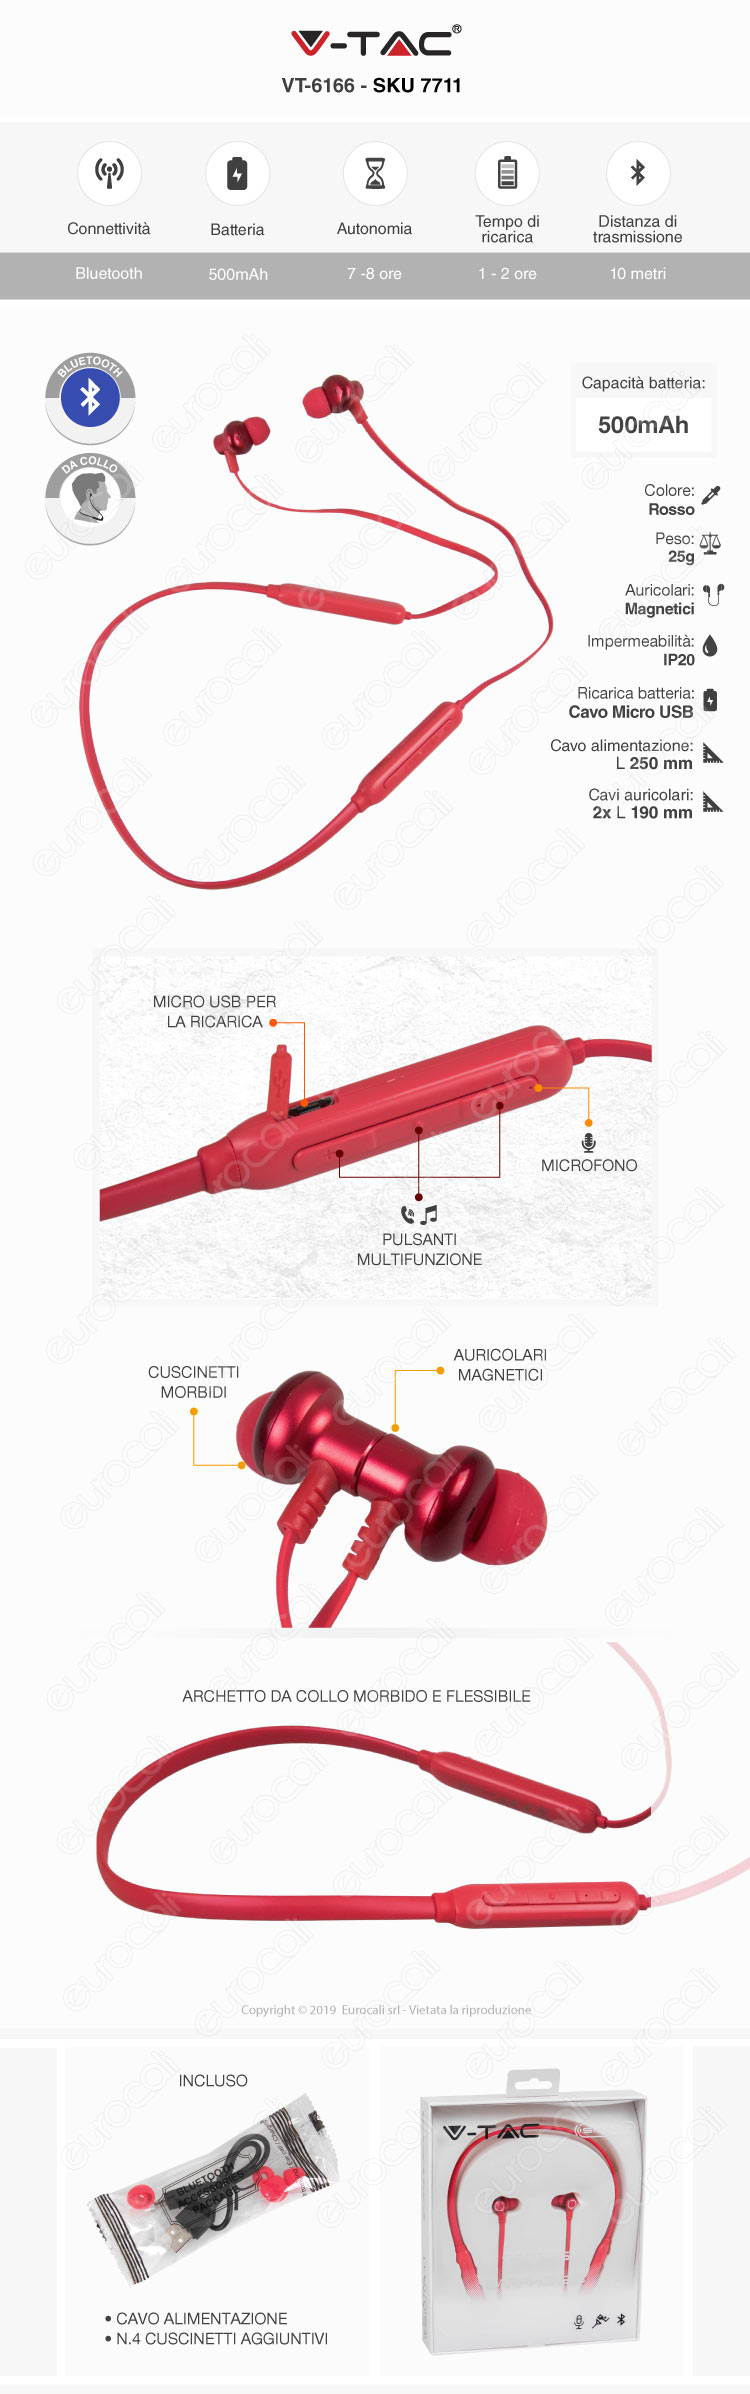 V-Tac VT-6166 Coppia di Auricolari Bluetooth Sports Earphones Colore Rosso